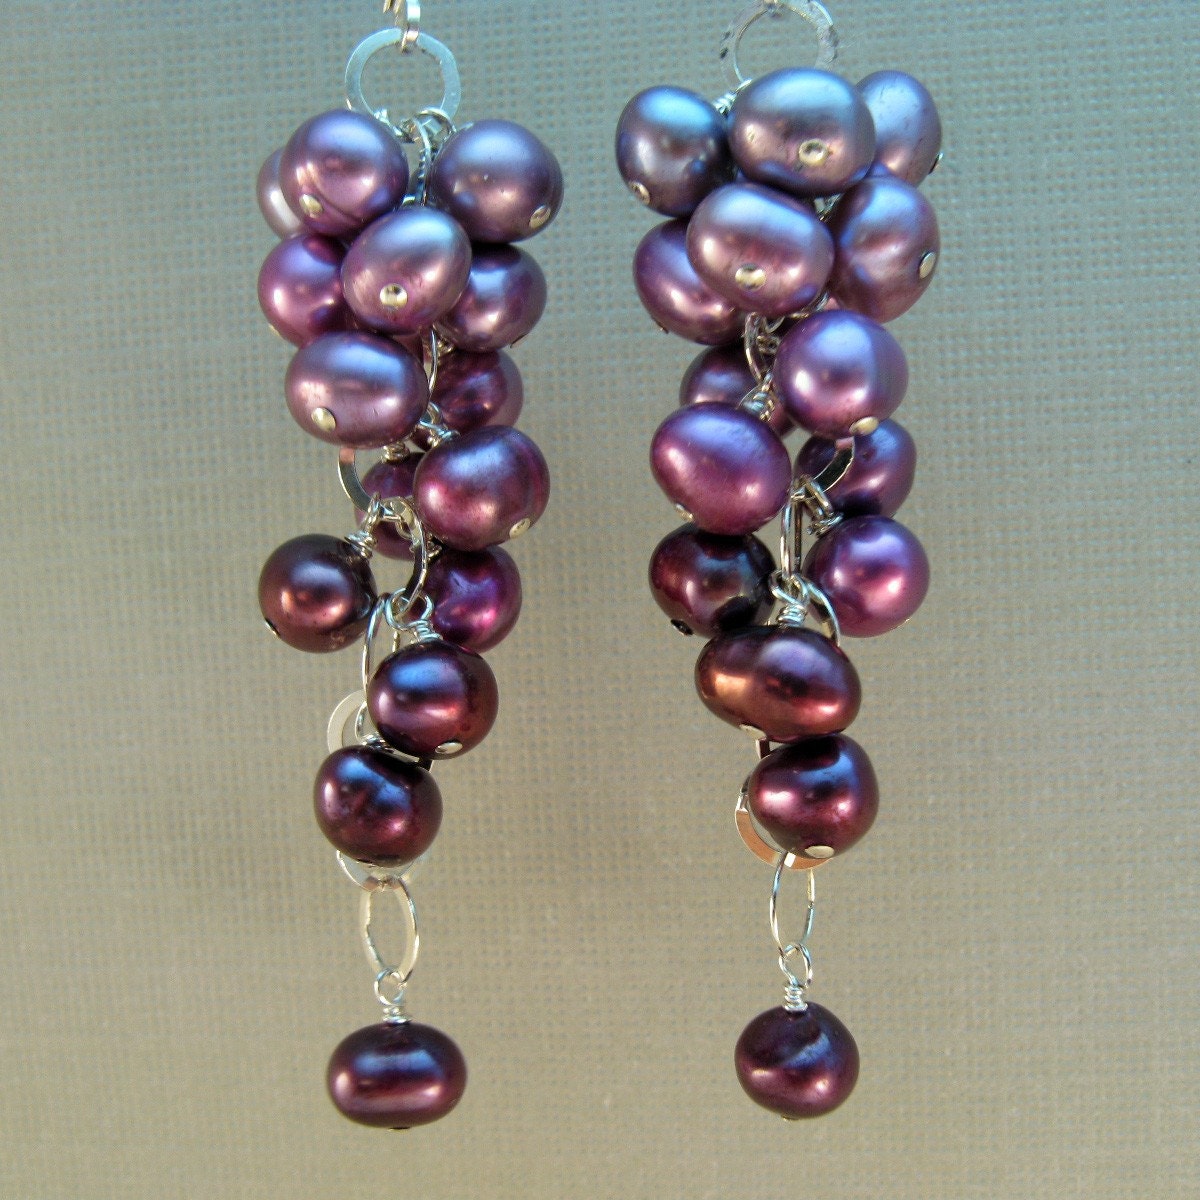 Earrings - Lavender Freshwater Pearls and Sterling Silver, June Birthstone - Napa